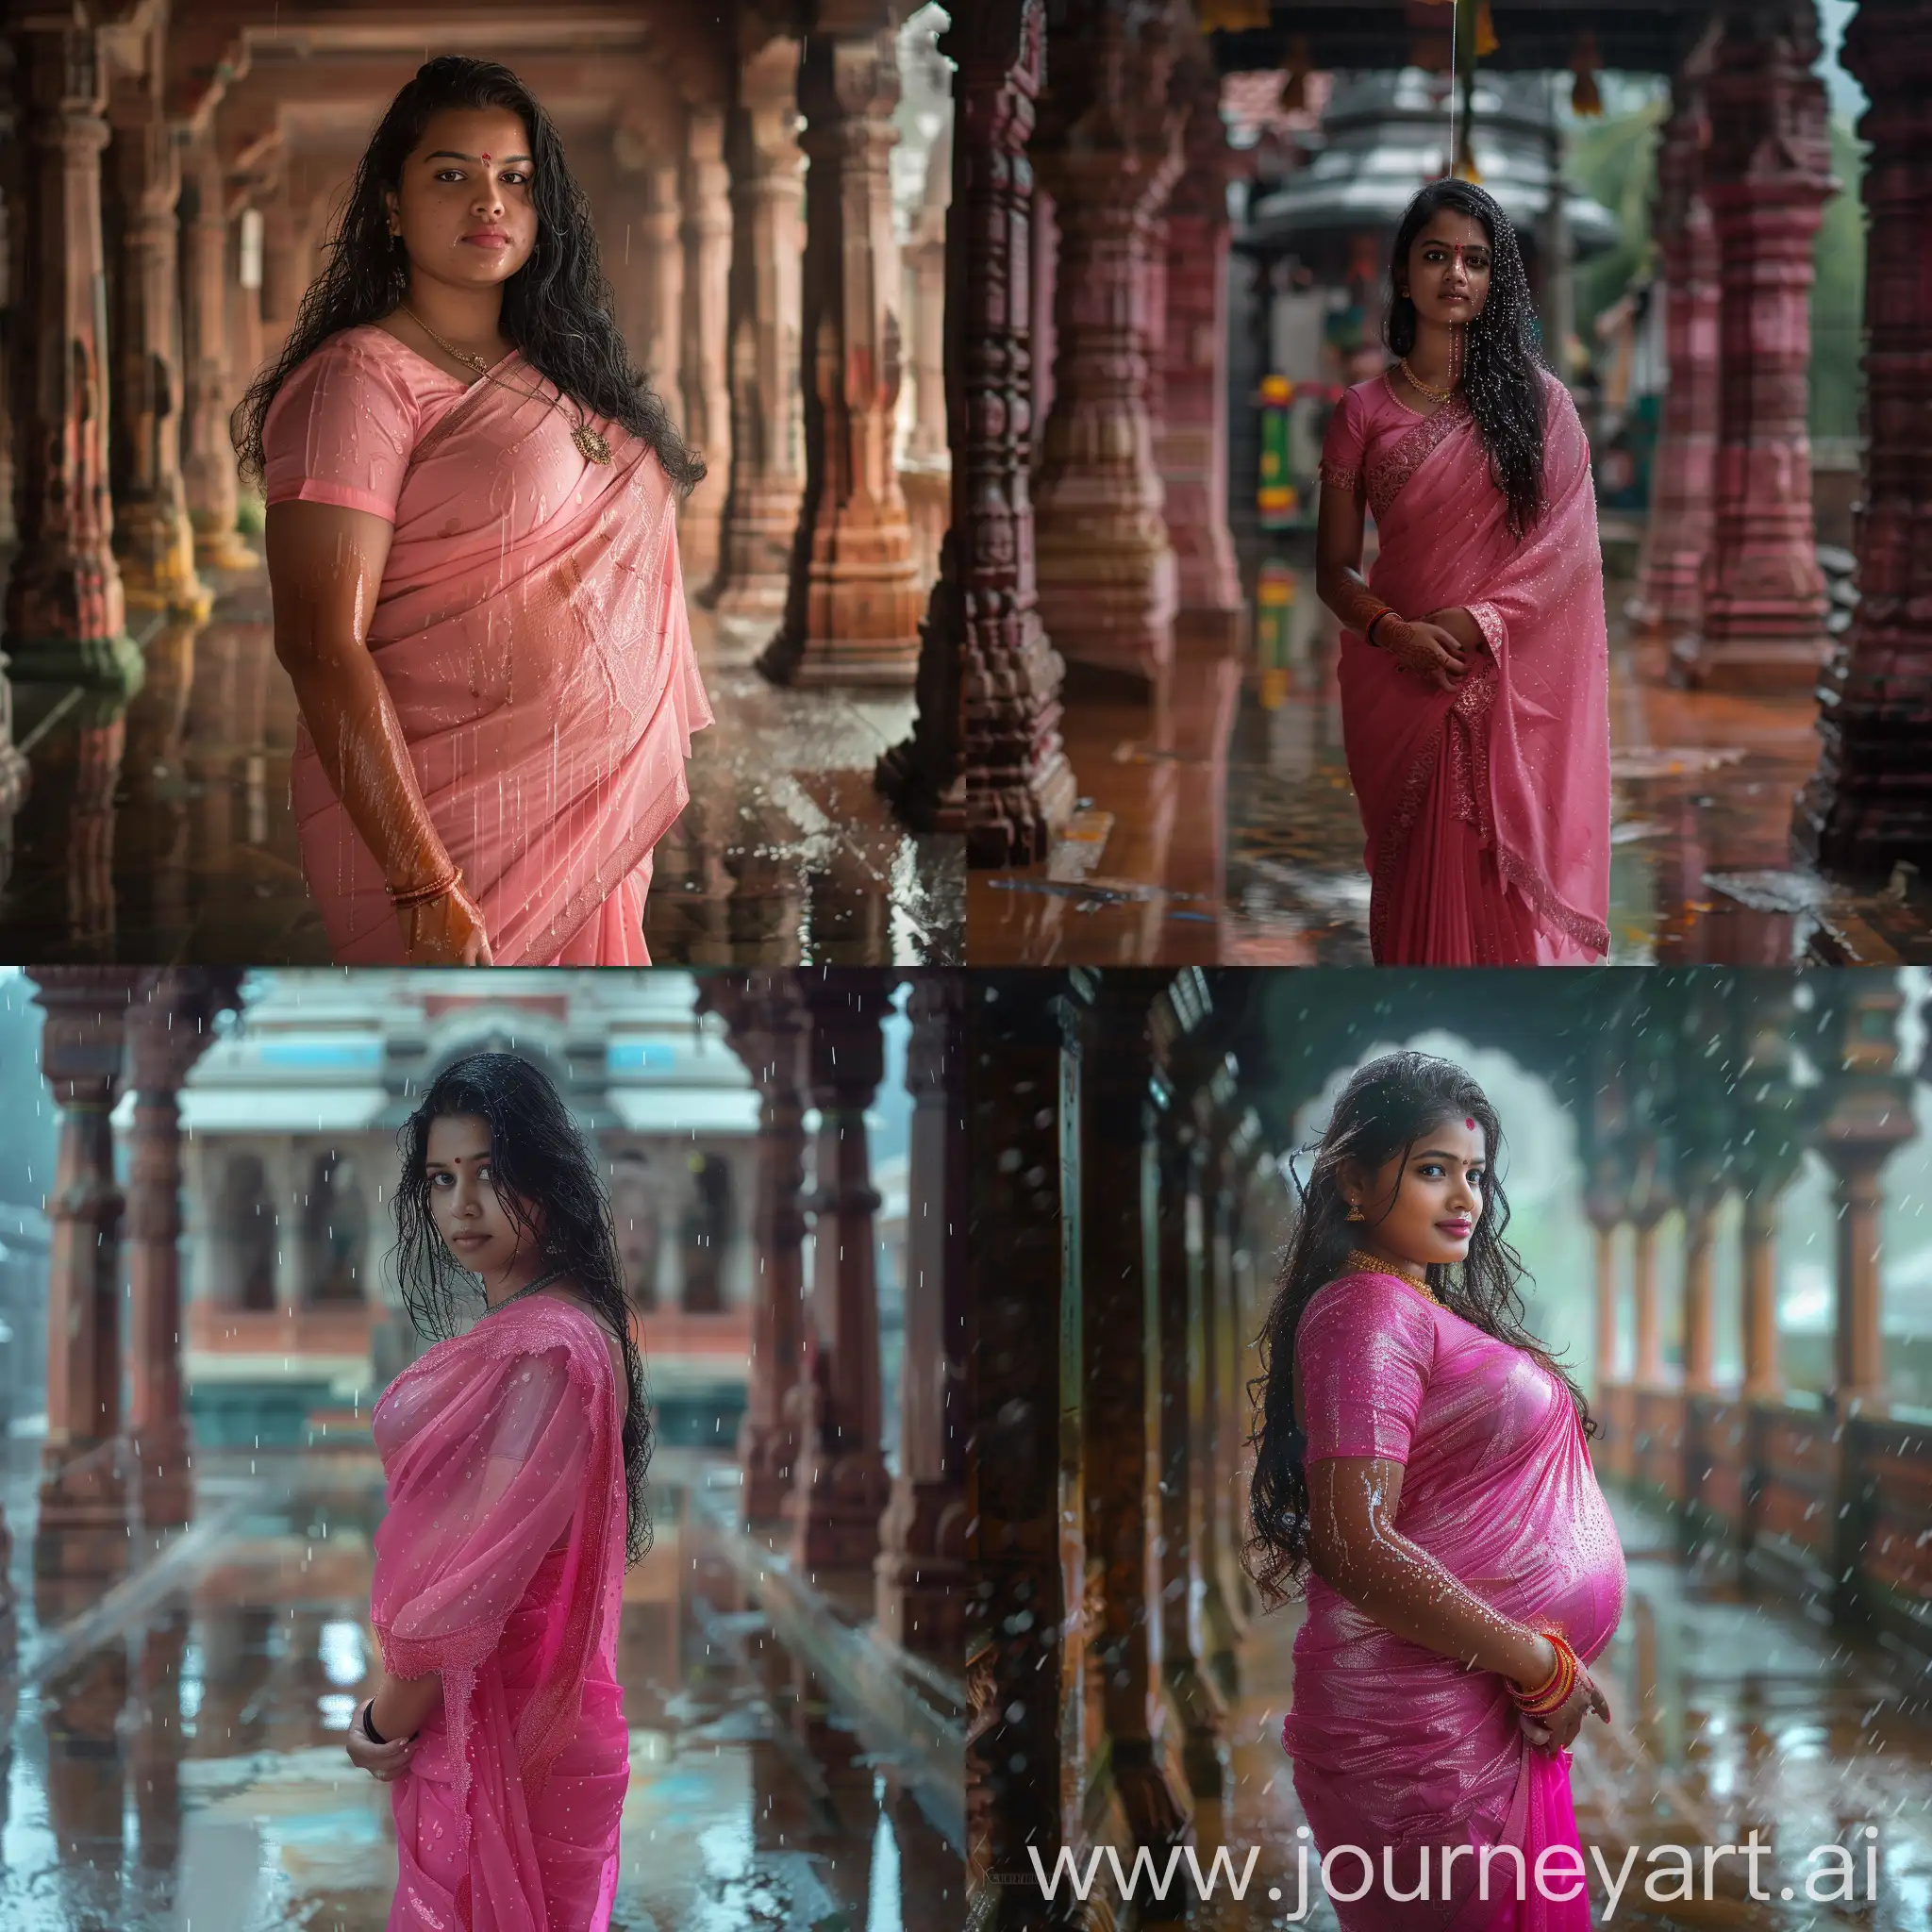 Classy-Tamil-Teenage-Girl-in-Pink-Saree-at-Rainy-Temple-in-Kochi